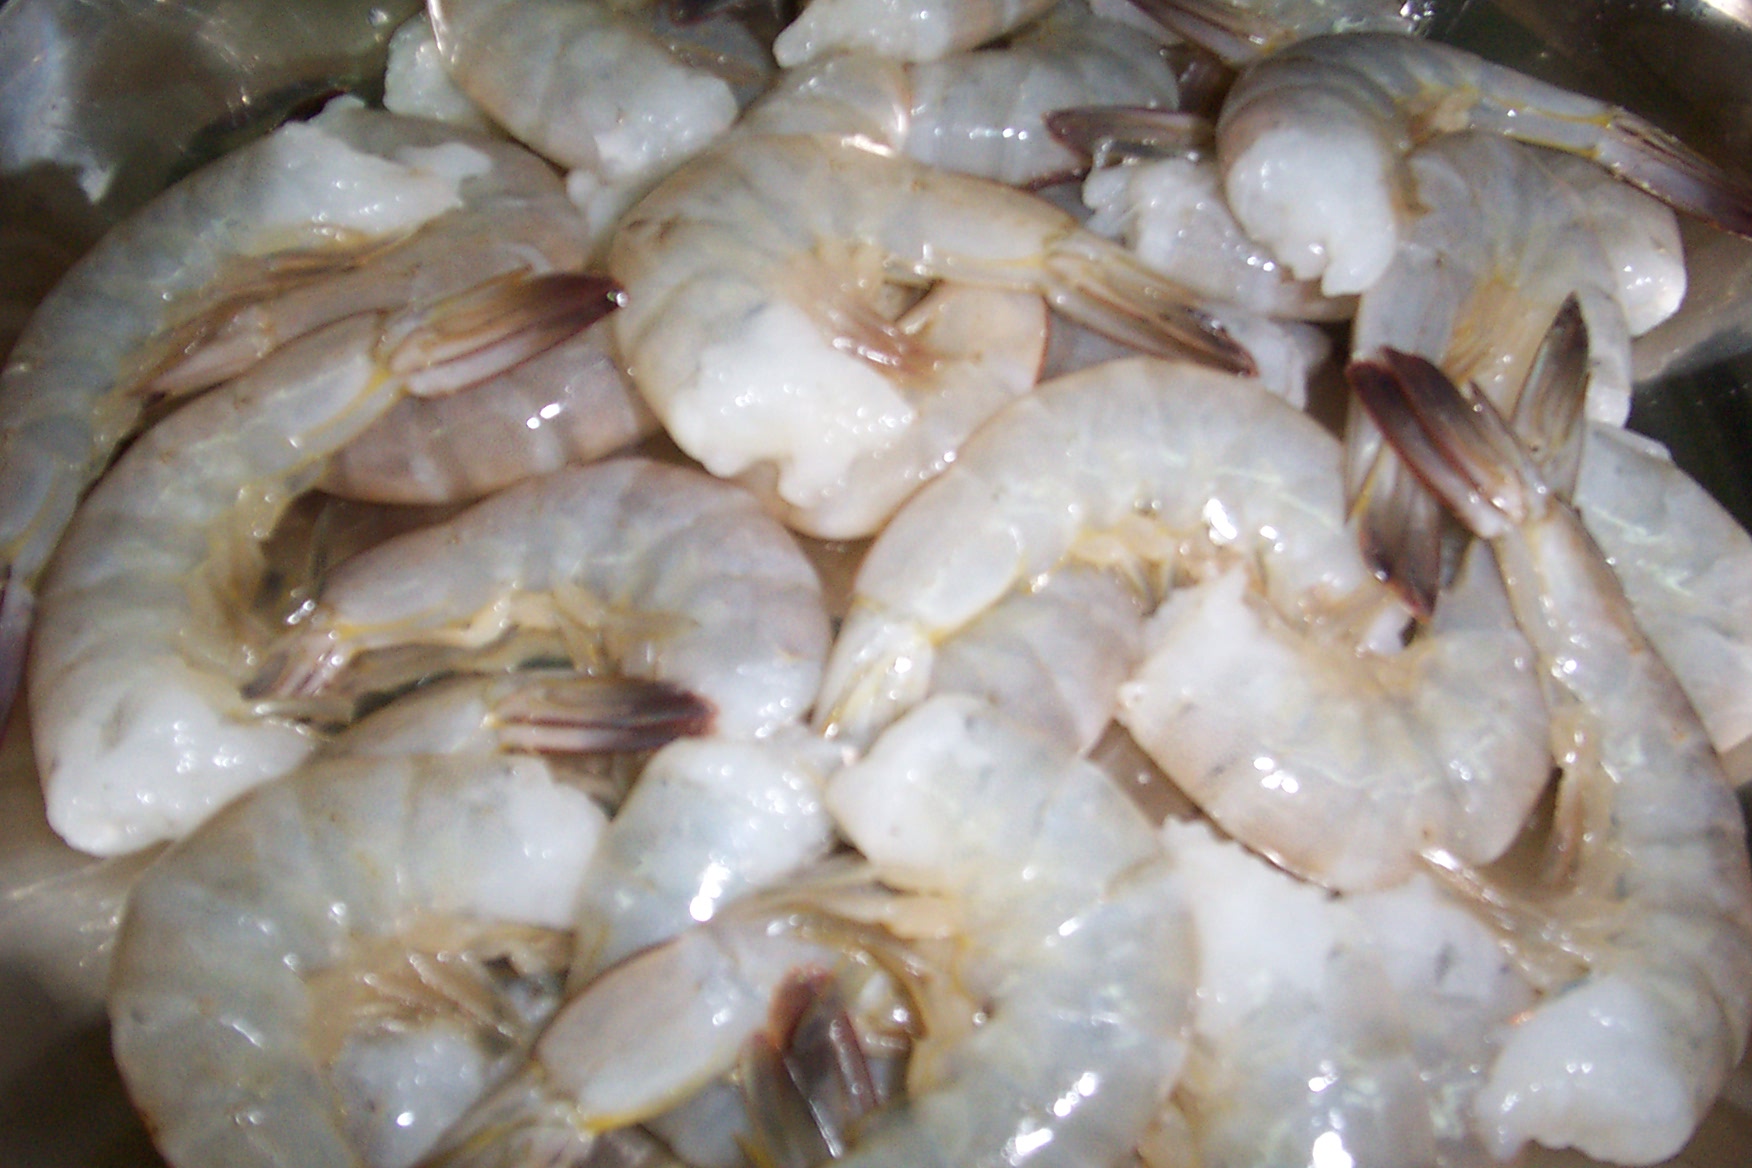 Frozen Vannamei Shrimp